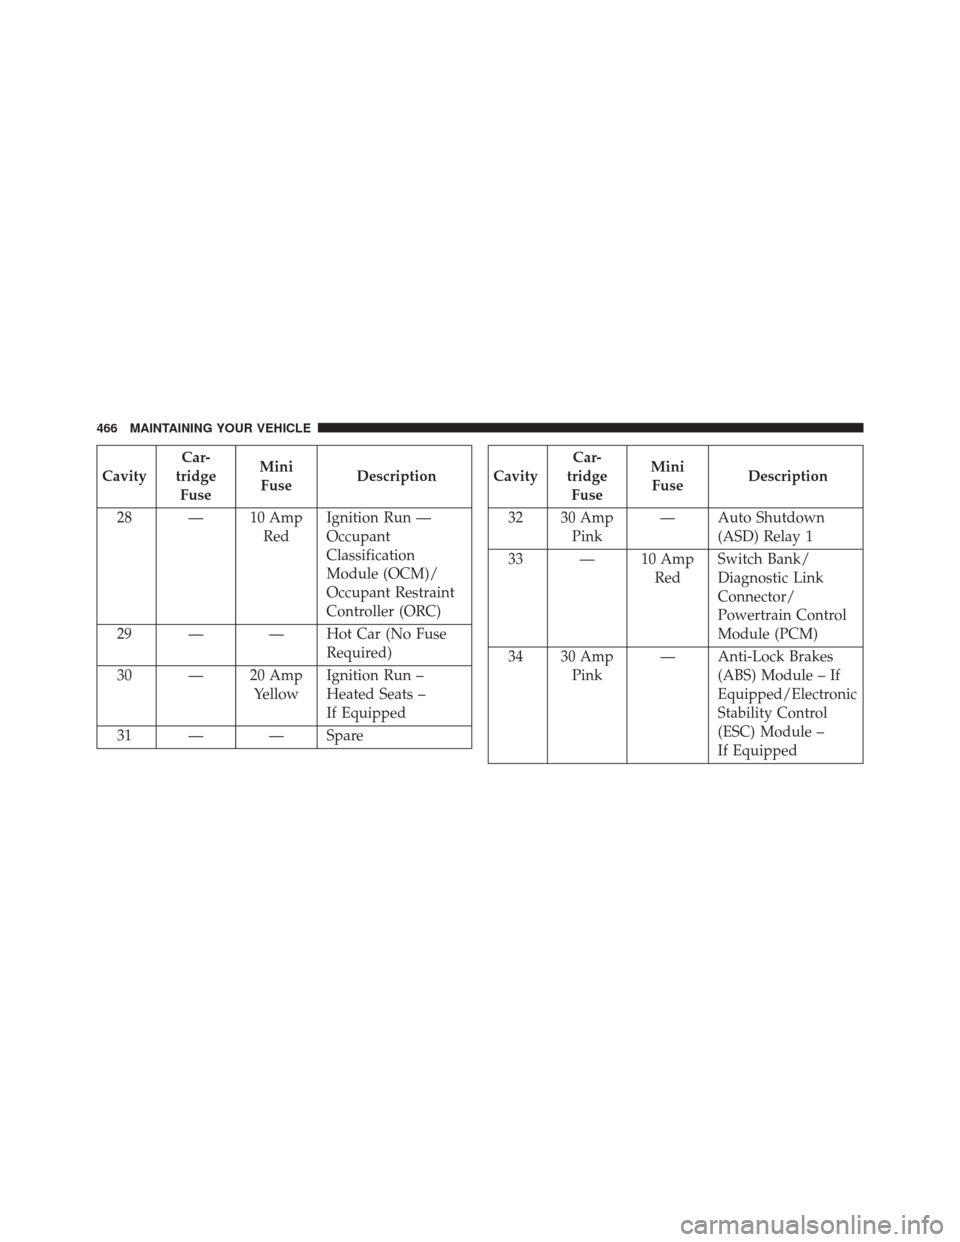 DODGE AVENGER 2013 2.G Owners Manual CavityCar-
tridge Fuse Mini
Fuse Description
28 — 10 Amp RedIgnition Run —
Occupant
Classification
Module (OCM)/
Occupant Restraint
Controller (ORC)
29 — — Hot Car (No Fuse Required)
30 — 20